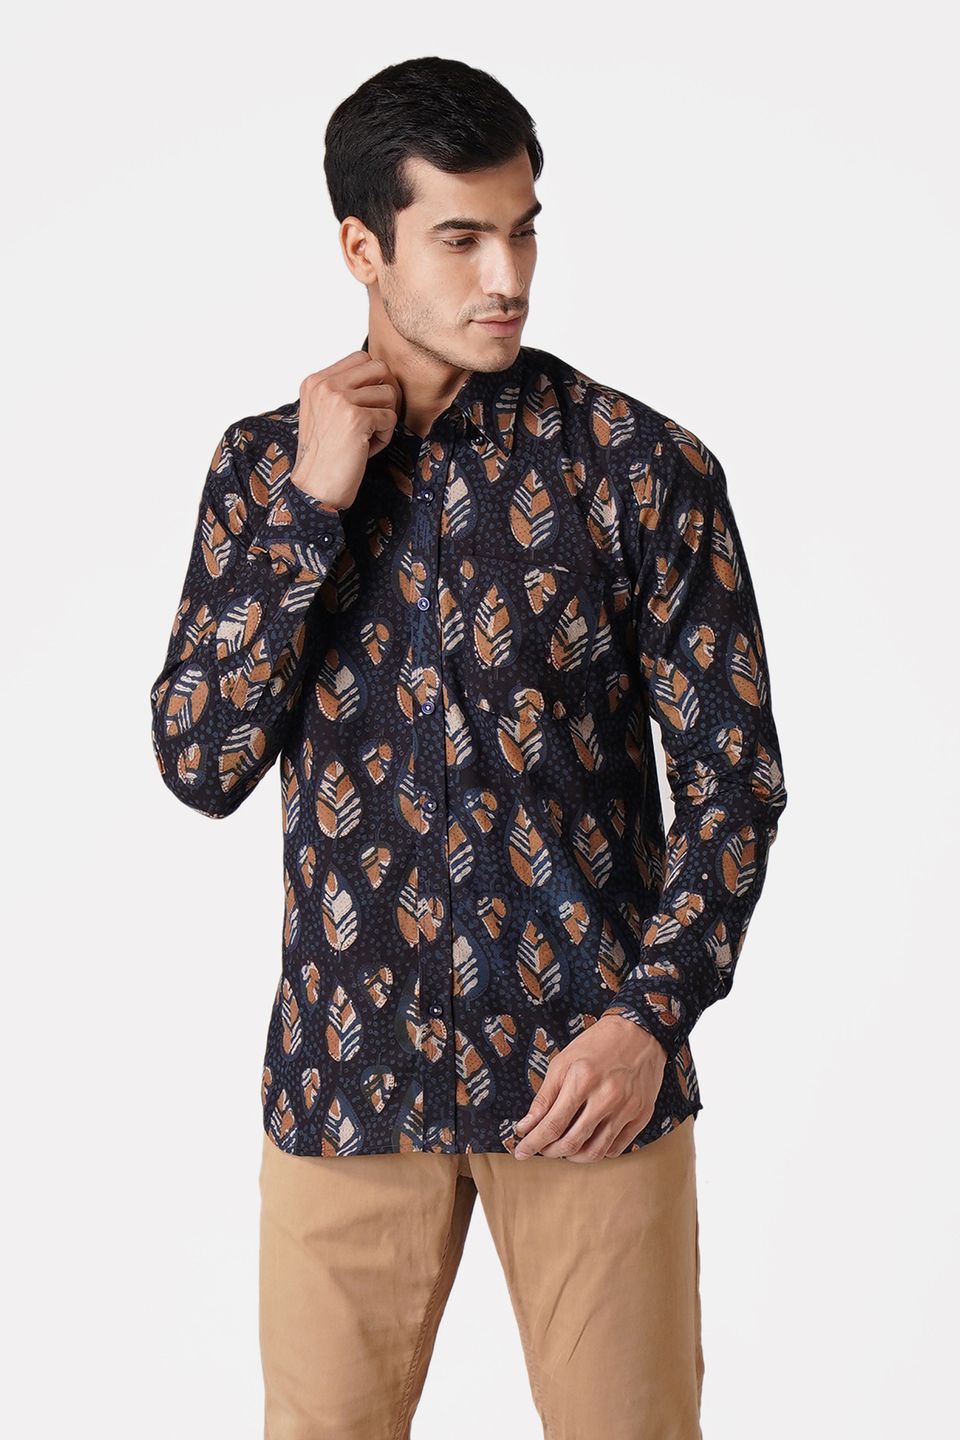 Wintage Men's Jaipur Cotton Tropical Hawaiian Batik Casual Shirt: Black